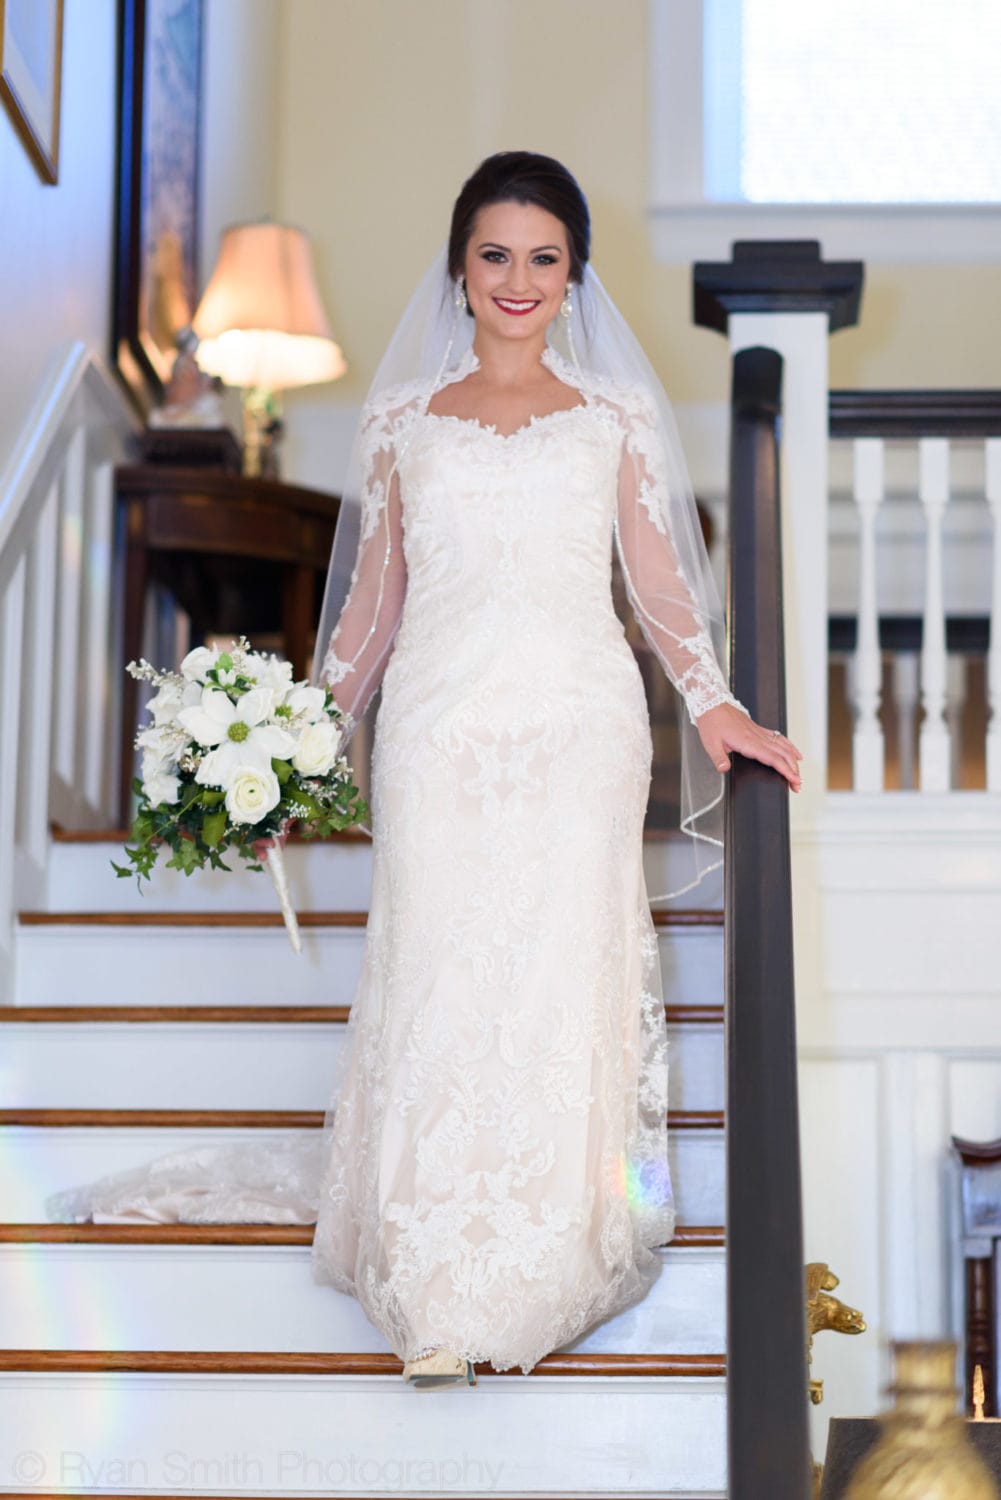 Bride walking down steps - Rosewood Manor - Marion - Rosewood Manor, Marion